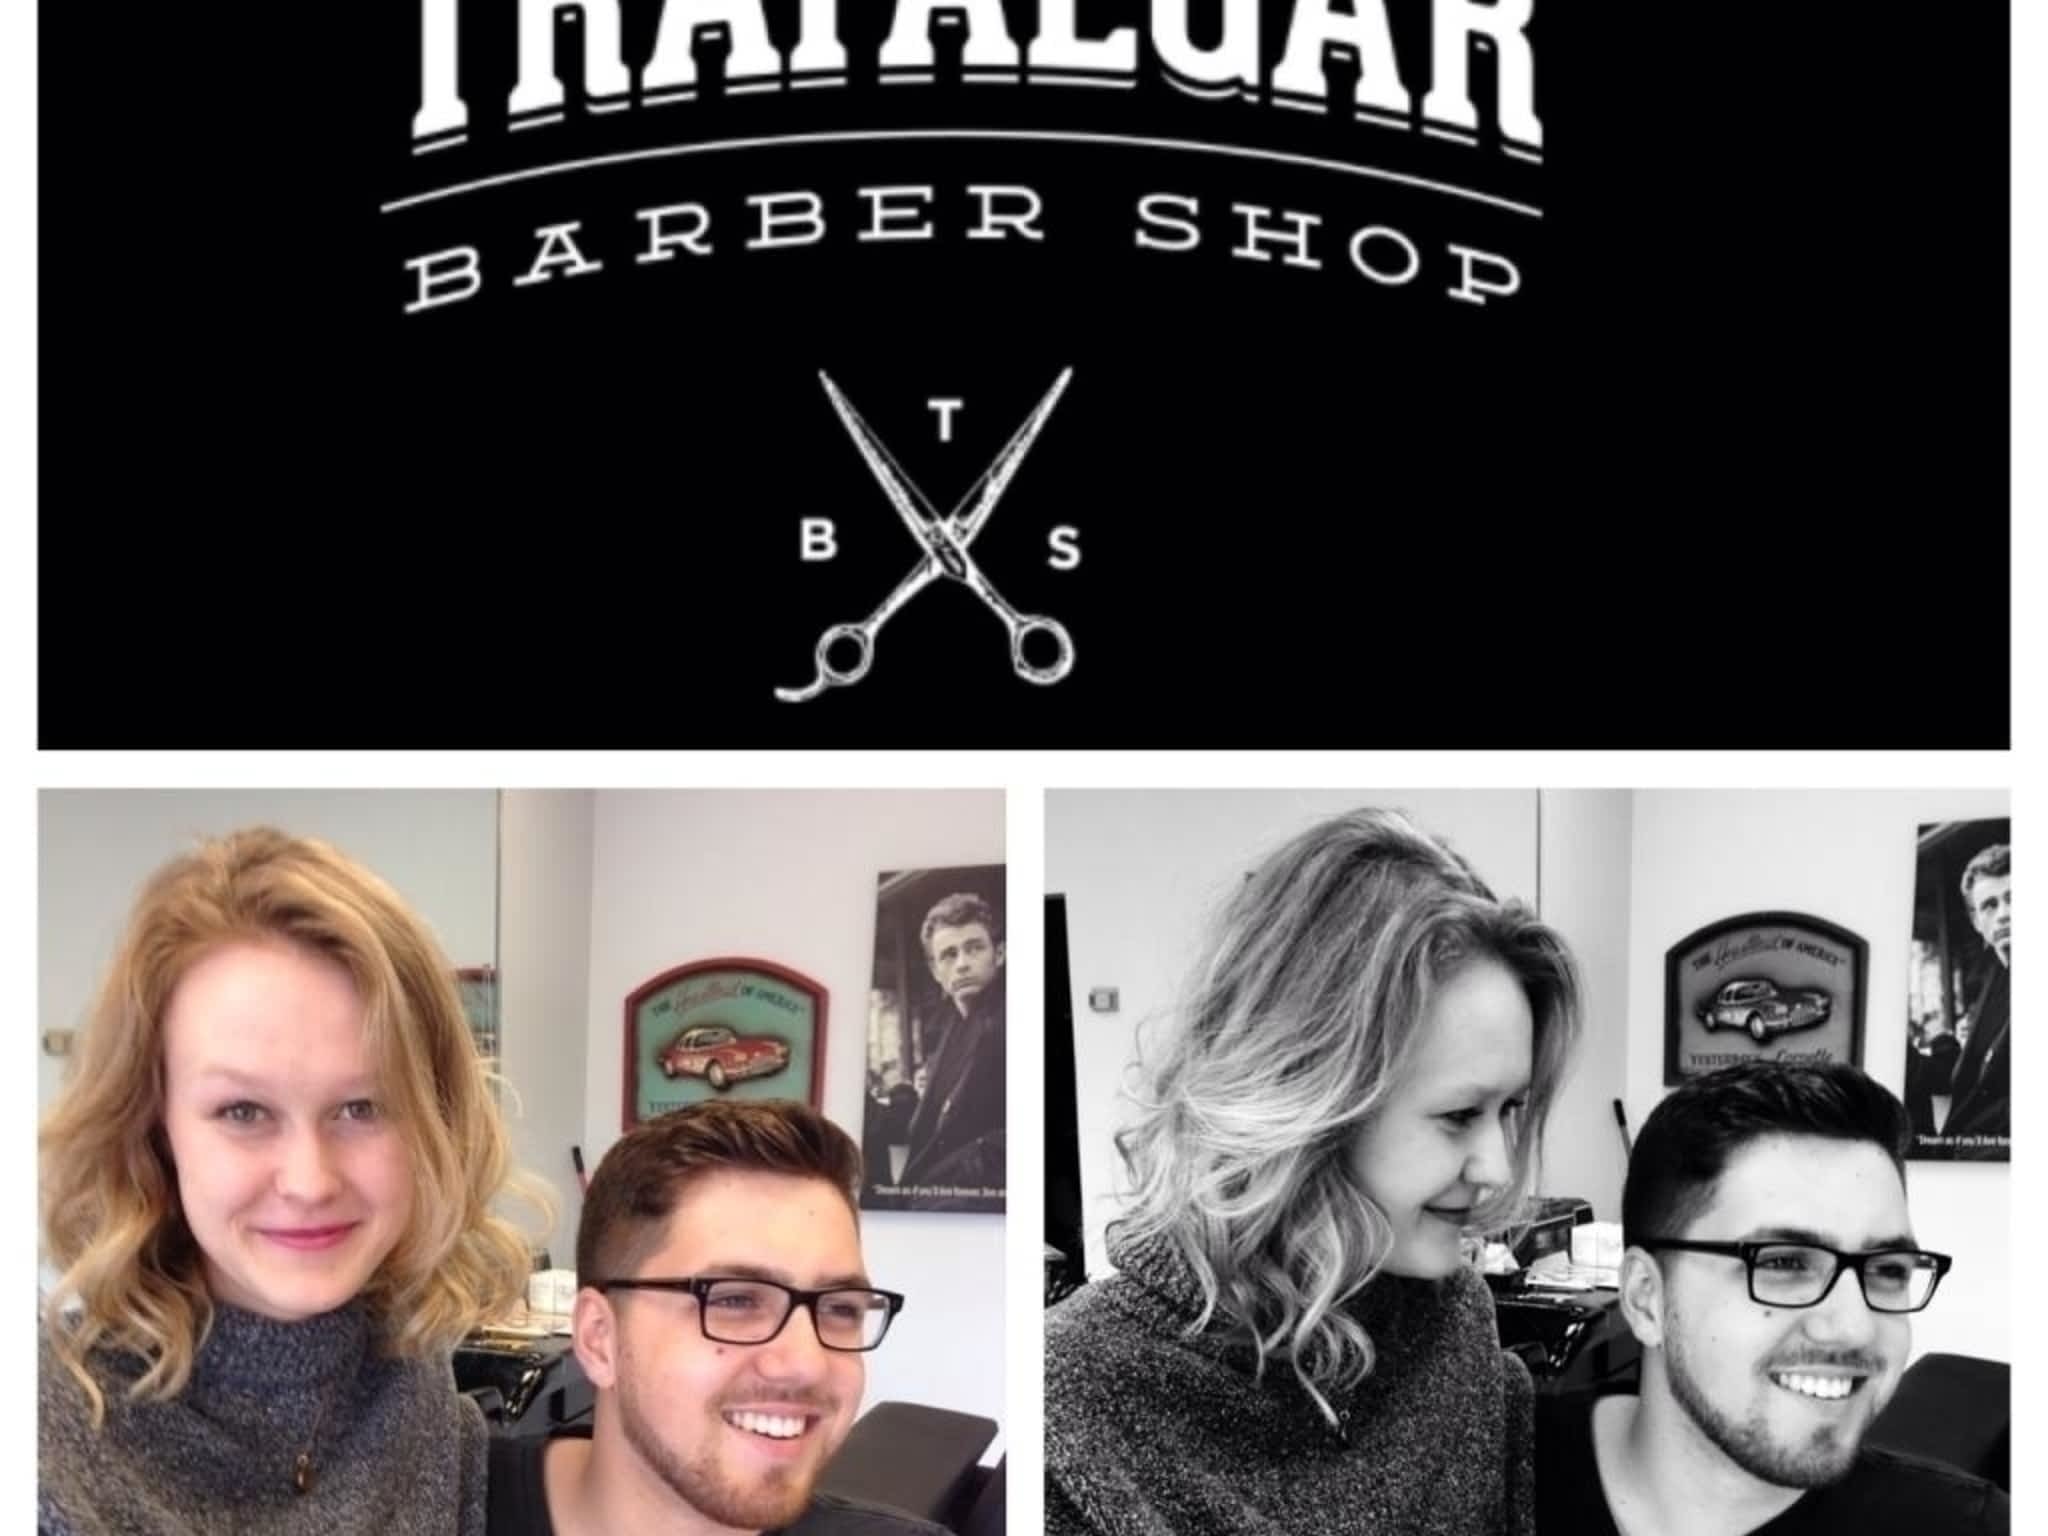 photo Trafalgar Barber Shop